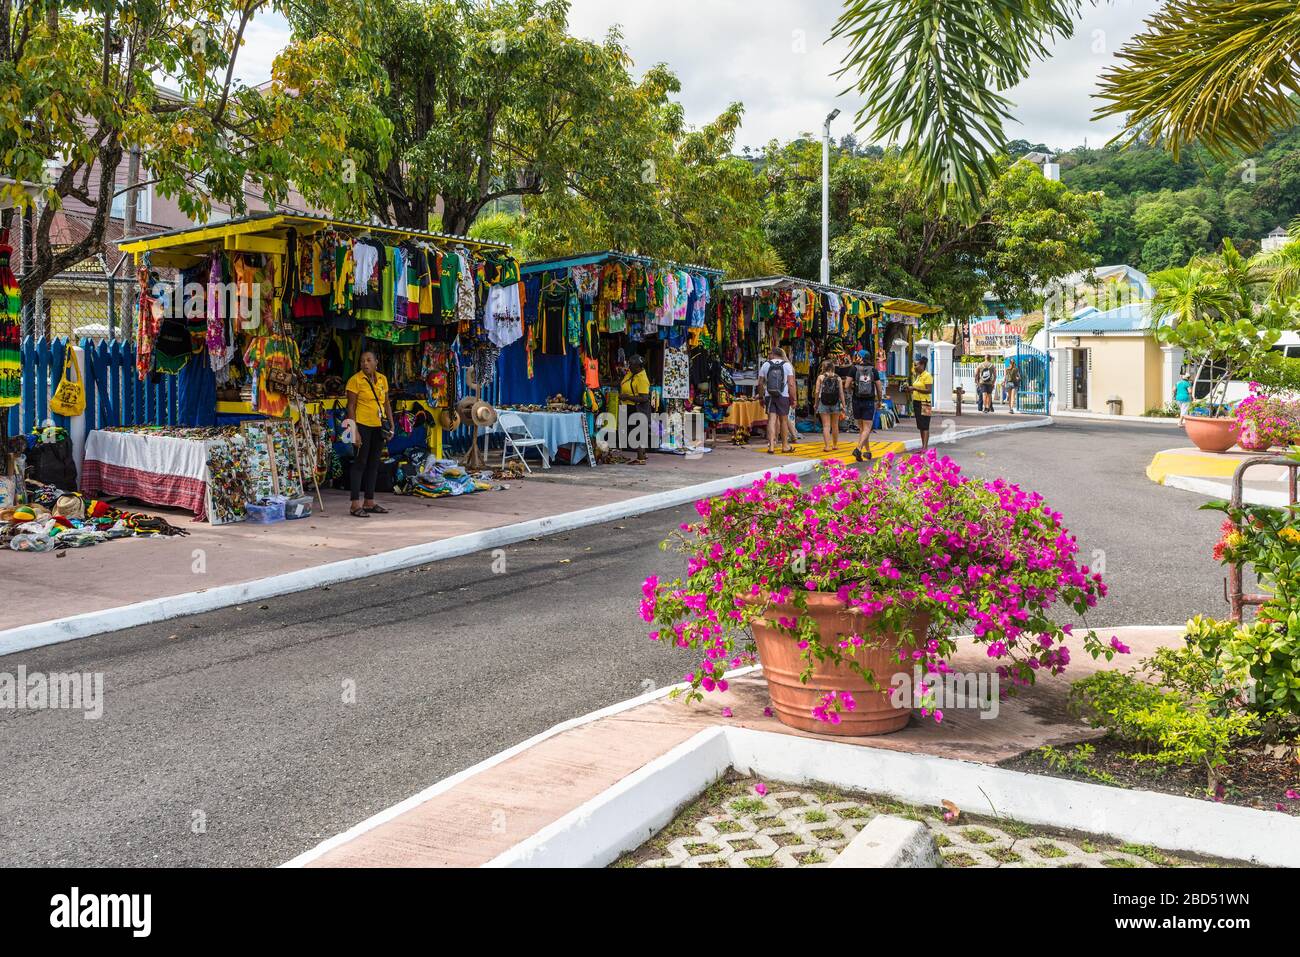 Ocho Rios, Jamaica - April 22, 2019: Souvenir street market in the tropical Caribbean island of Ocho Rios, Jamaica. Flowerbed in the foreground. Stock Photo